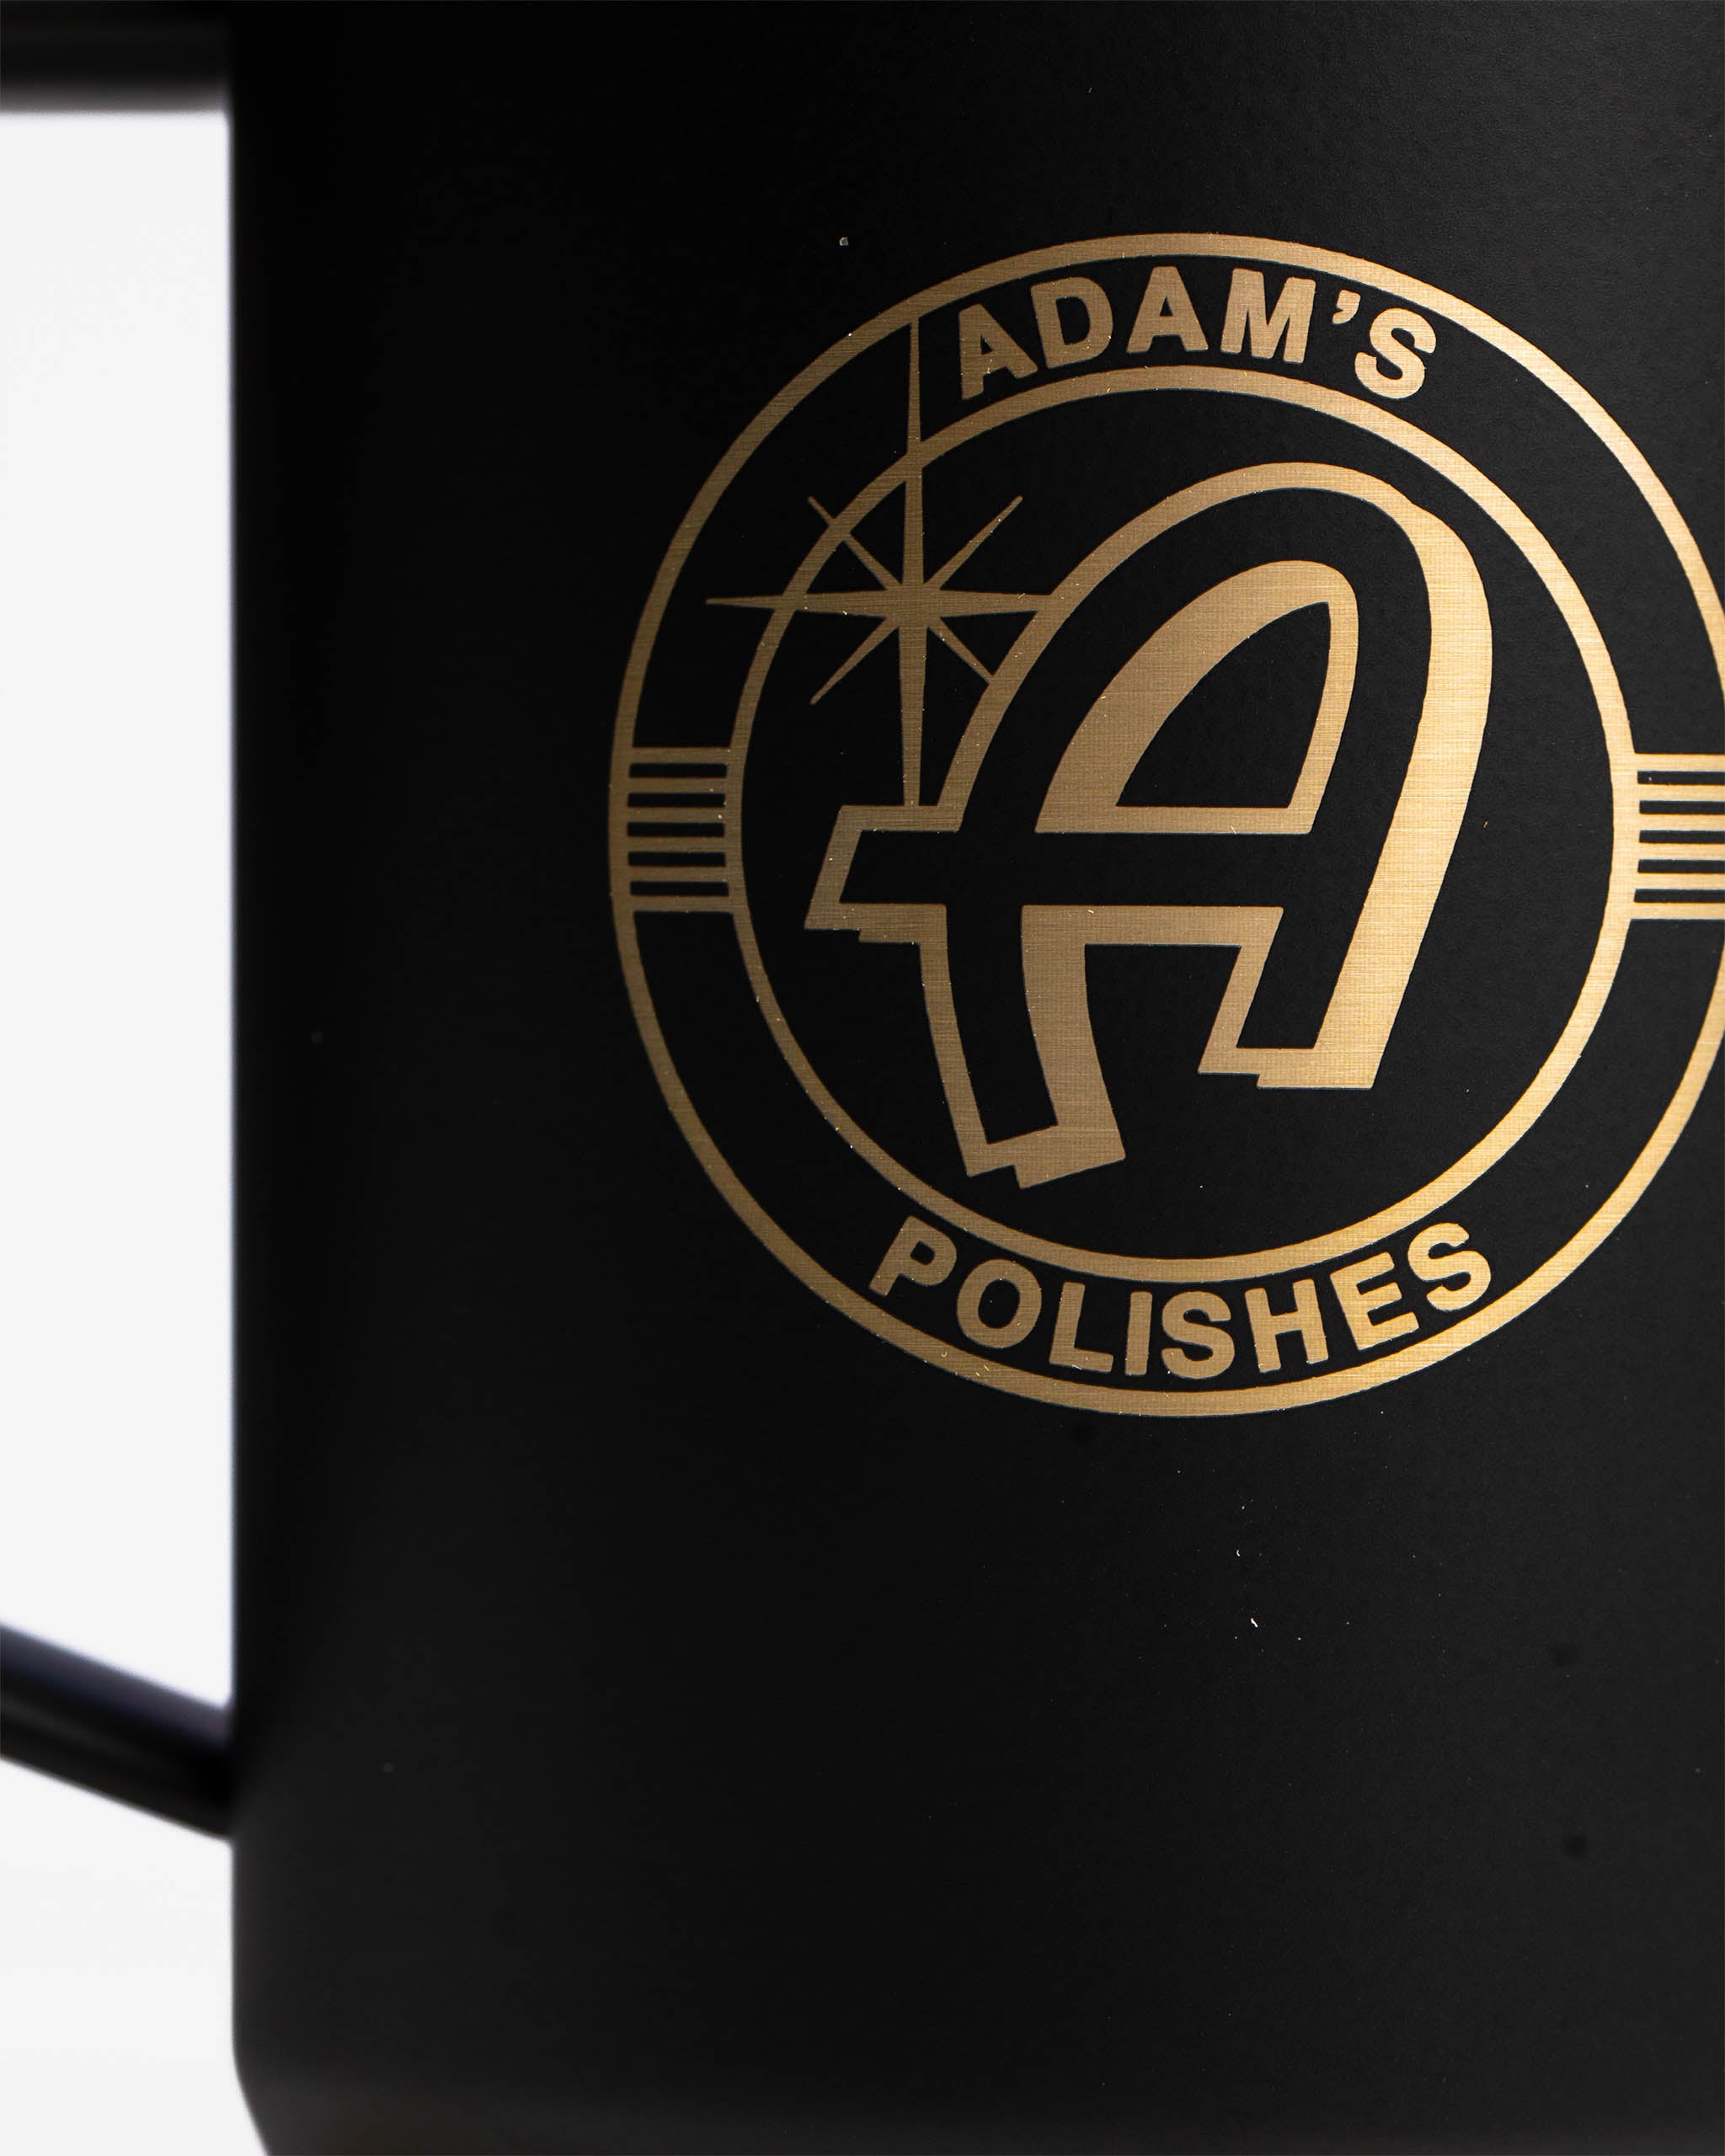 Adam's X Corkcicle Coffee Mug Black (16oz)